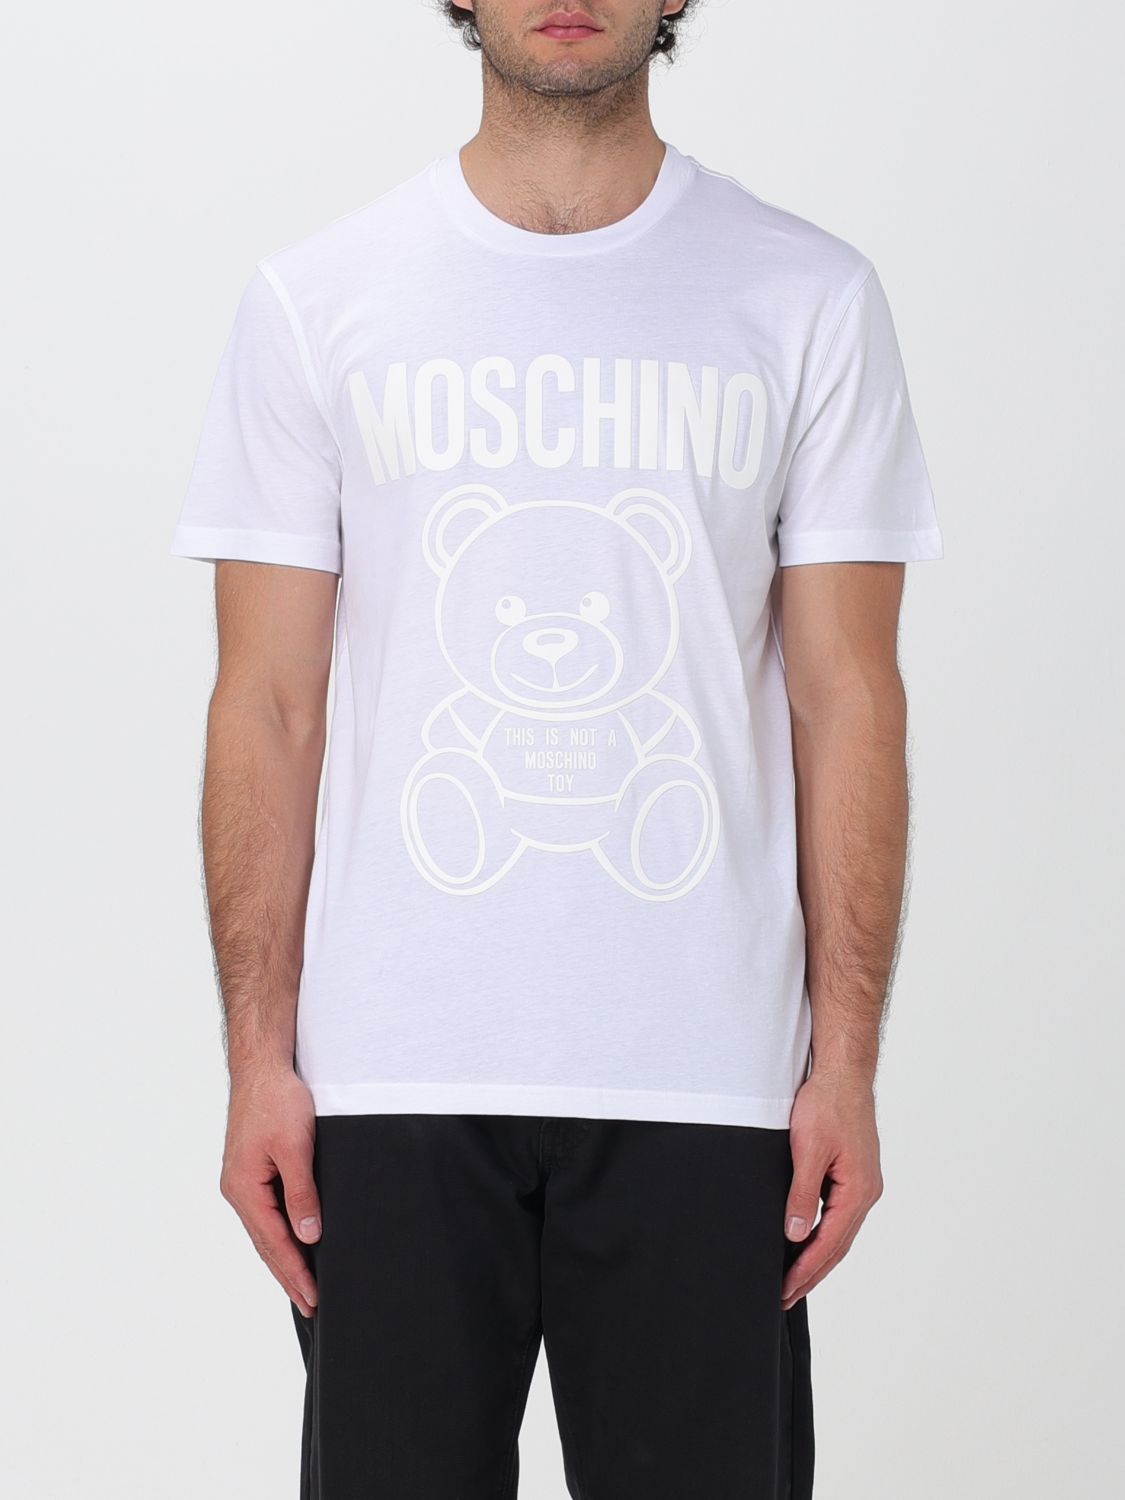 Moschino Couture T-shirt  Herren Farbe Weiss In White